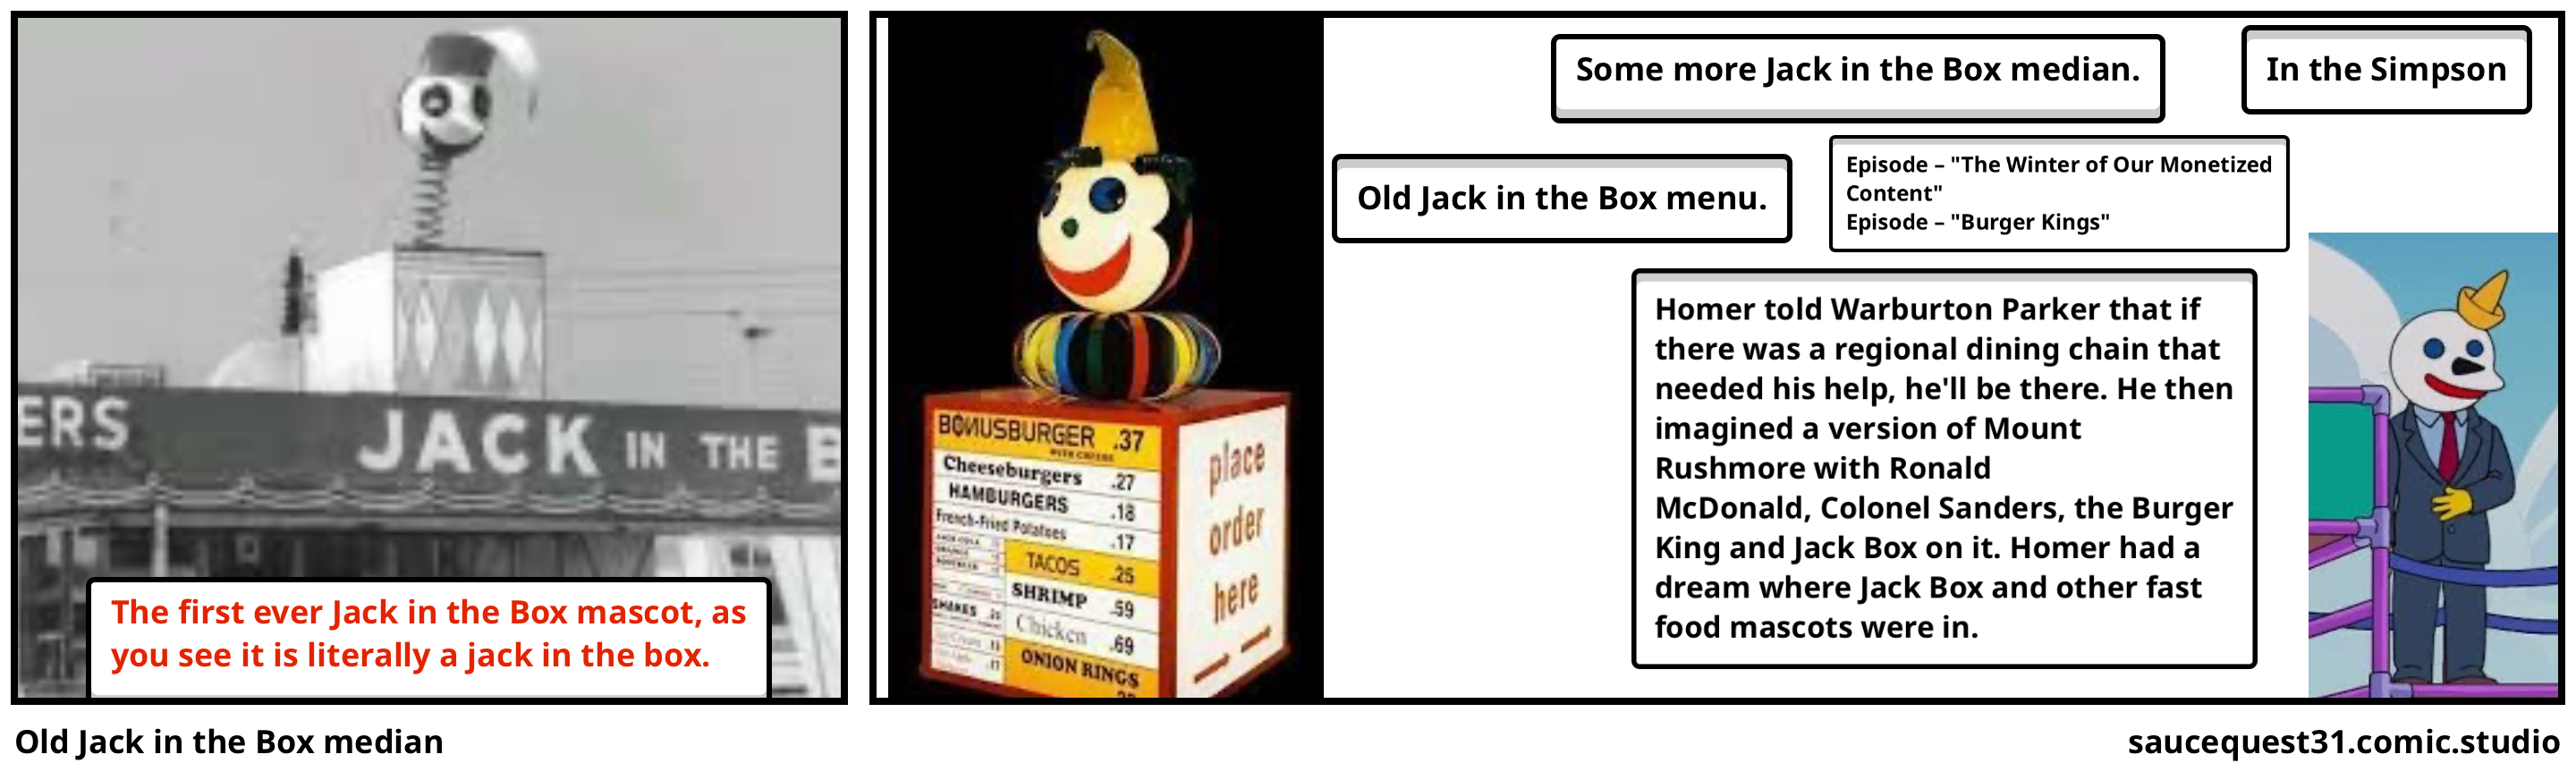 Old Jack in the Box median